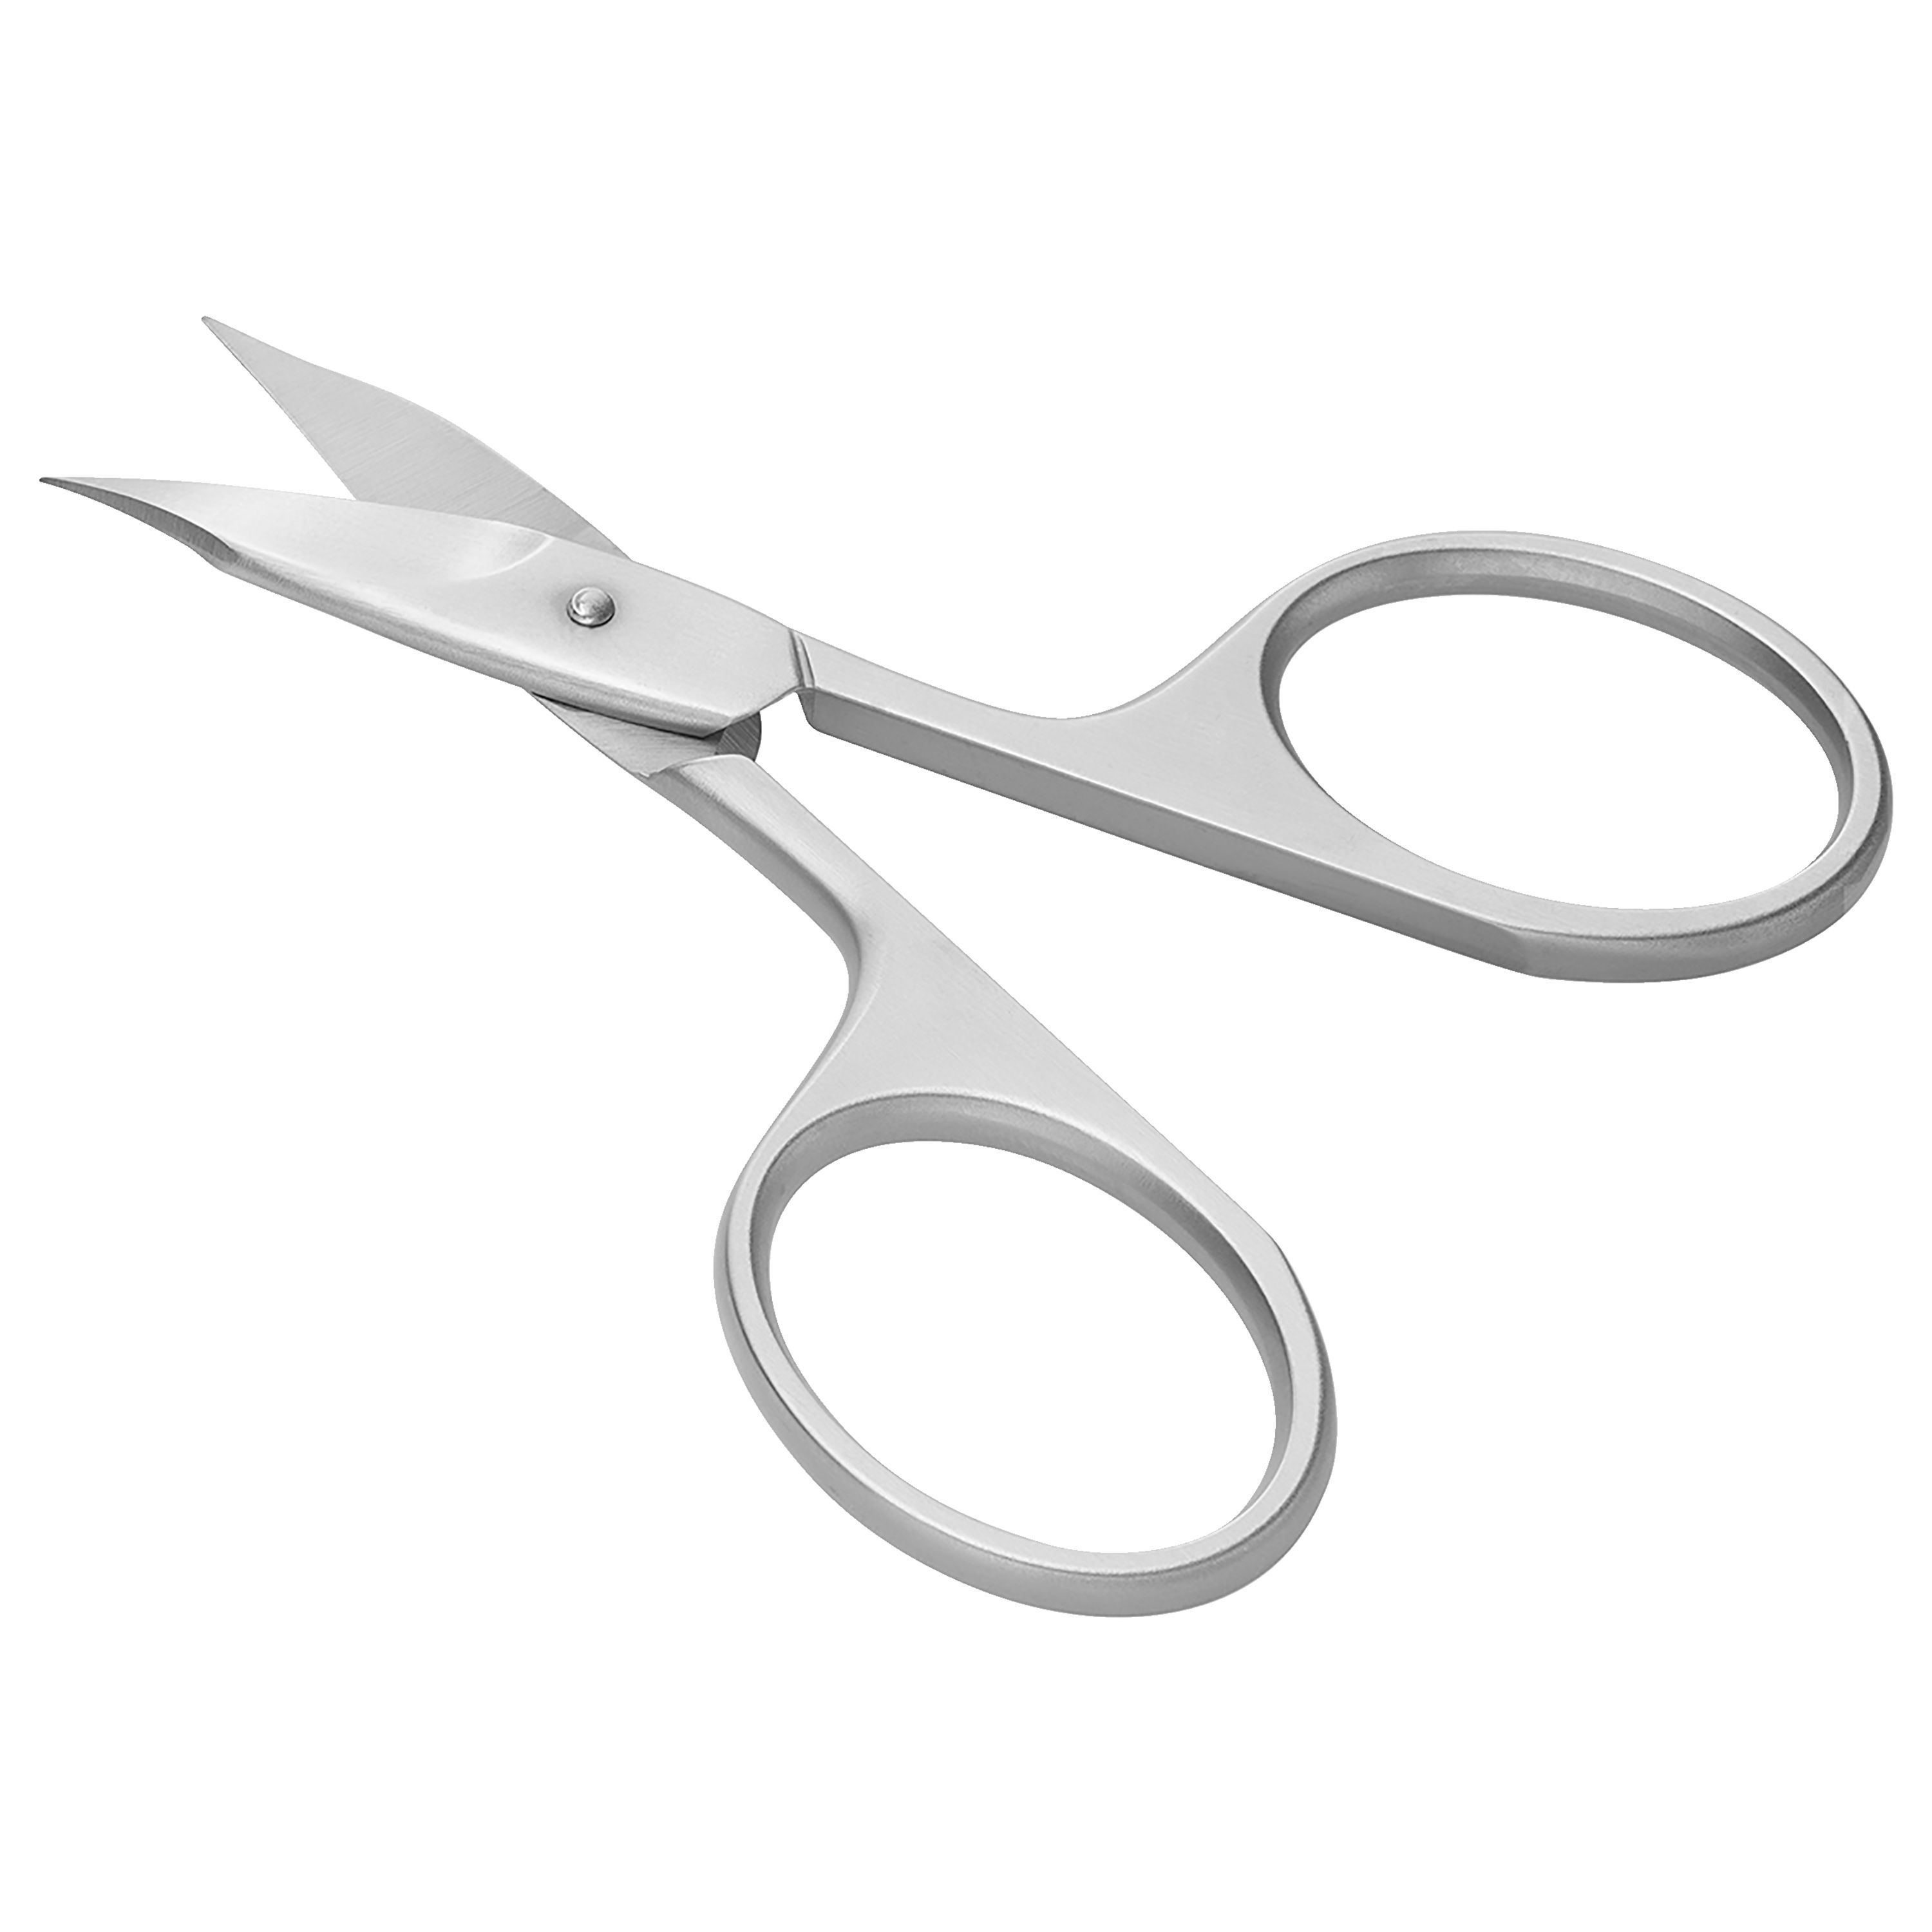 ZWILLING TWINOX scissors Buy Nail